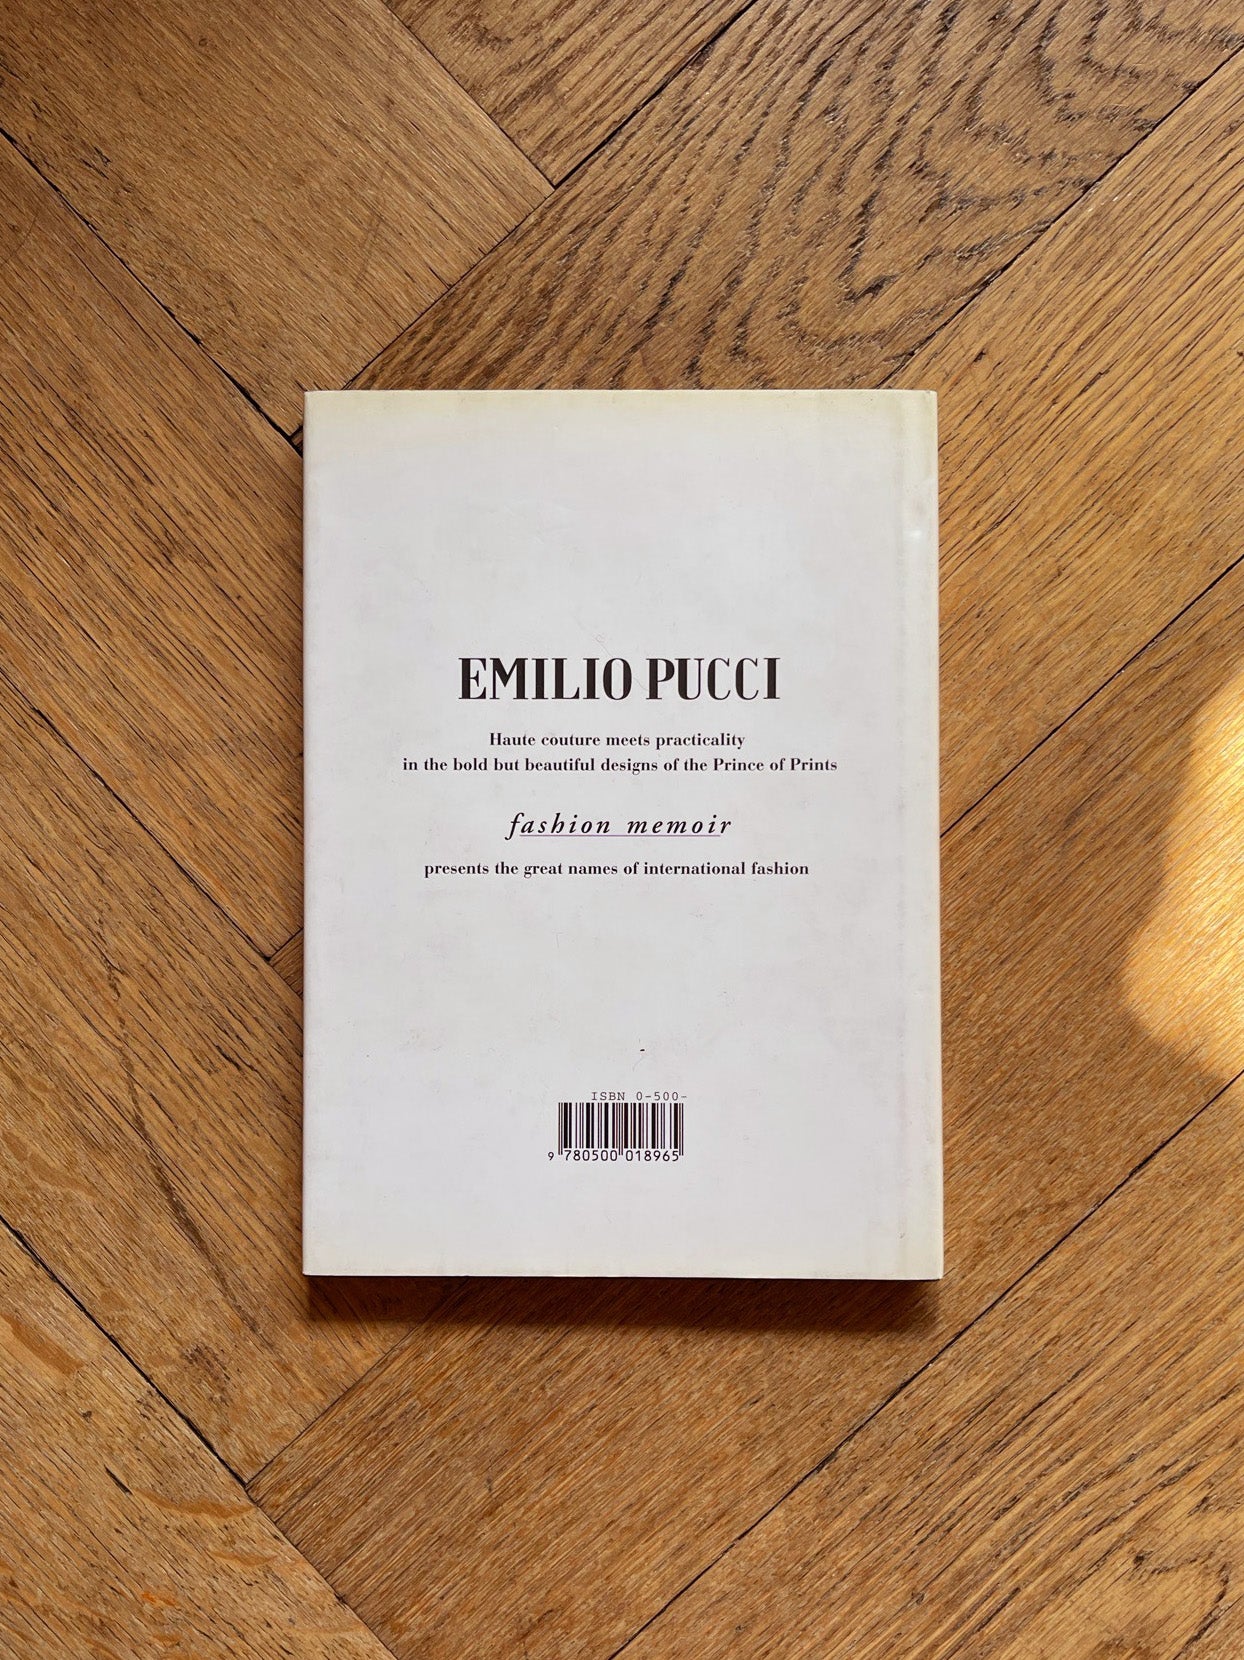  Emilio Pucci Fashion Memoir by Mariuccia Casadio